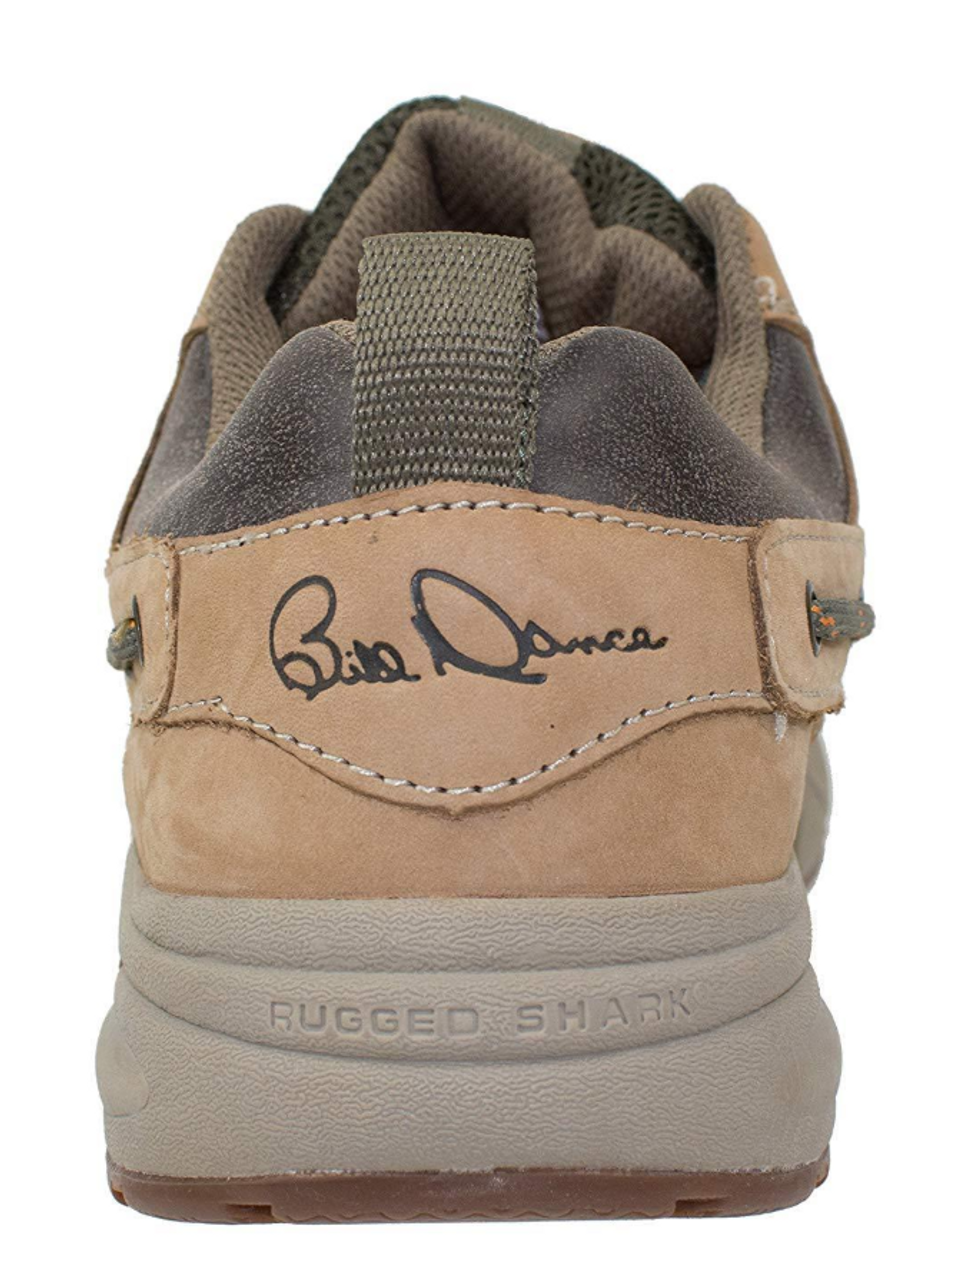 bill dance shoes